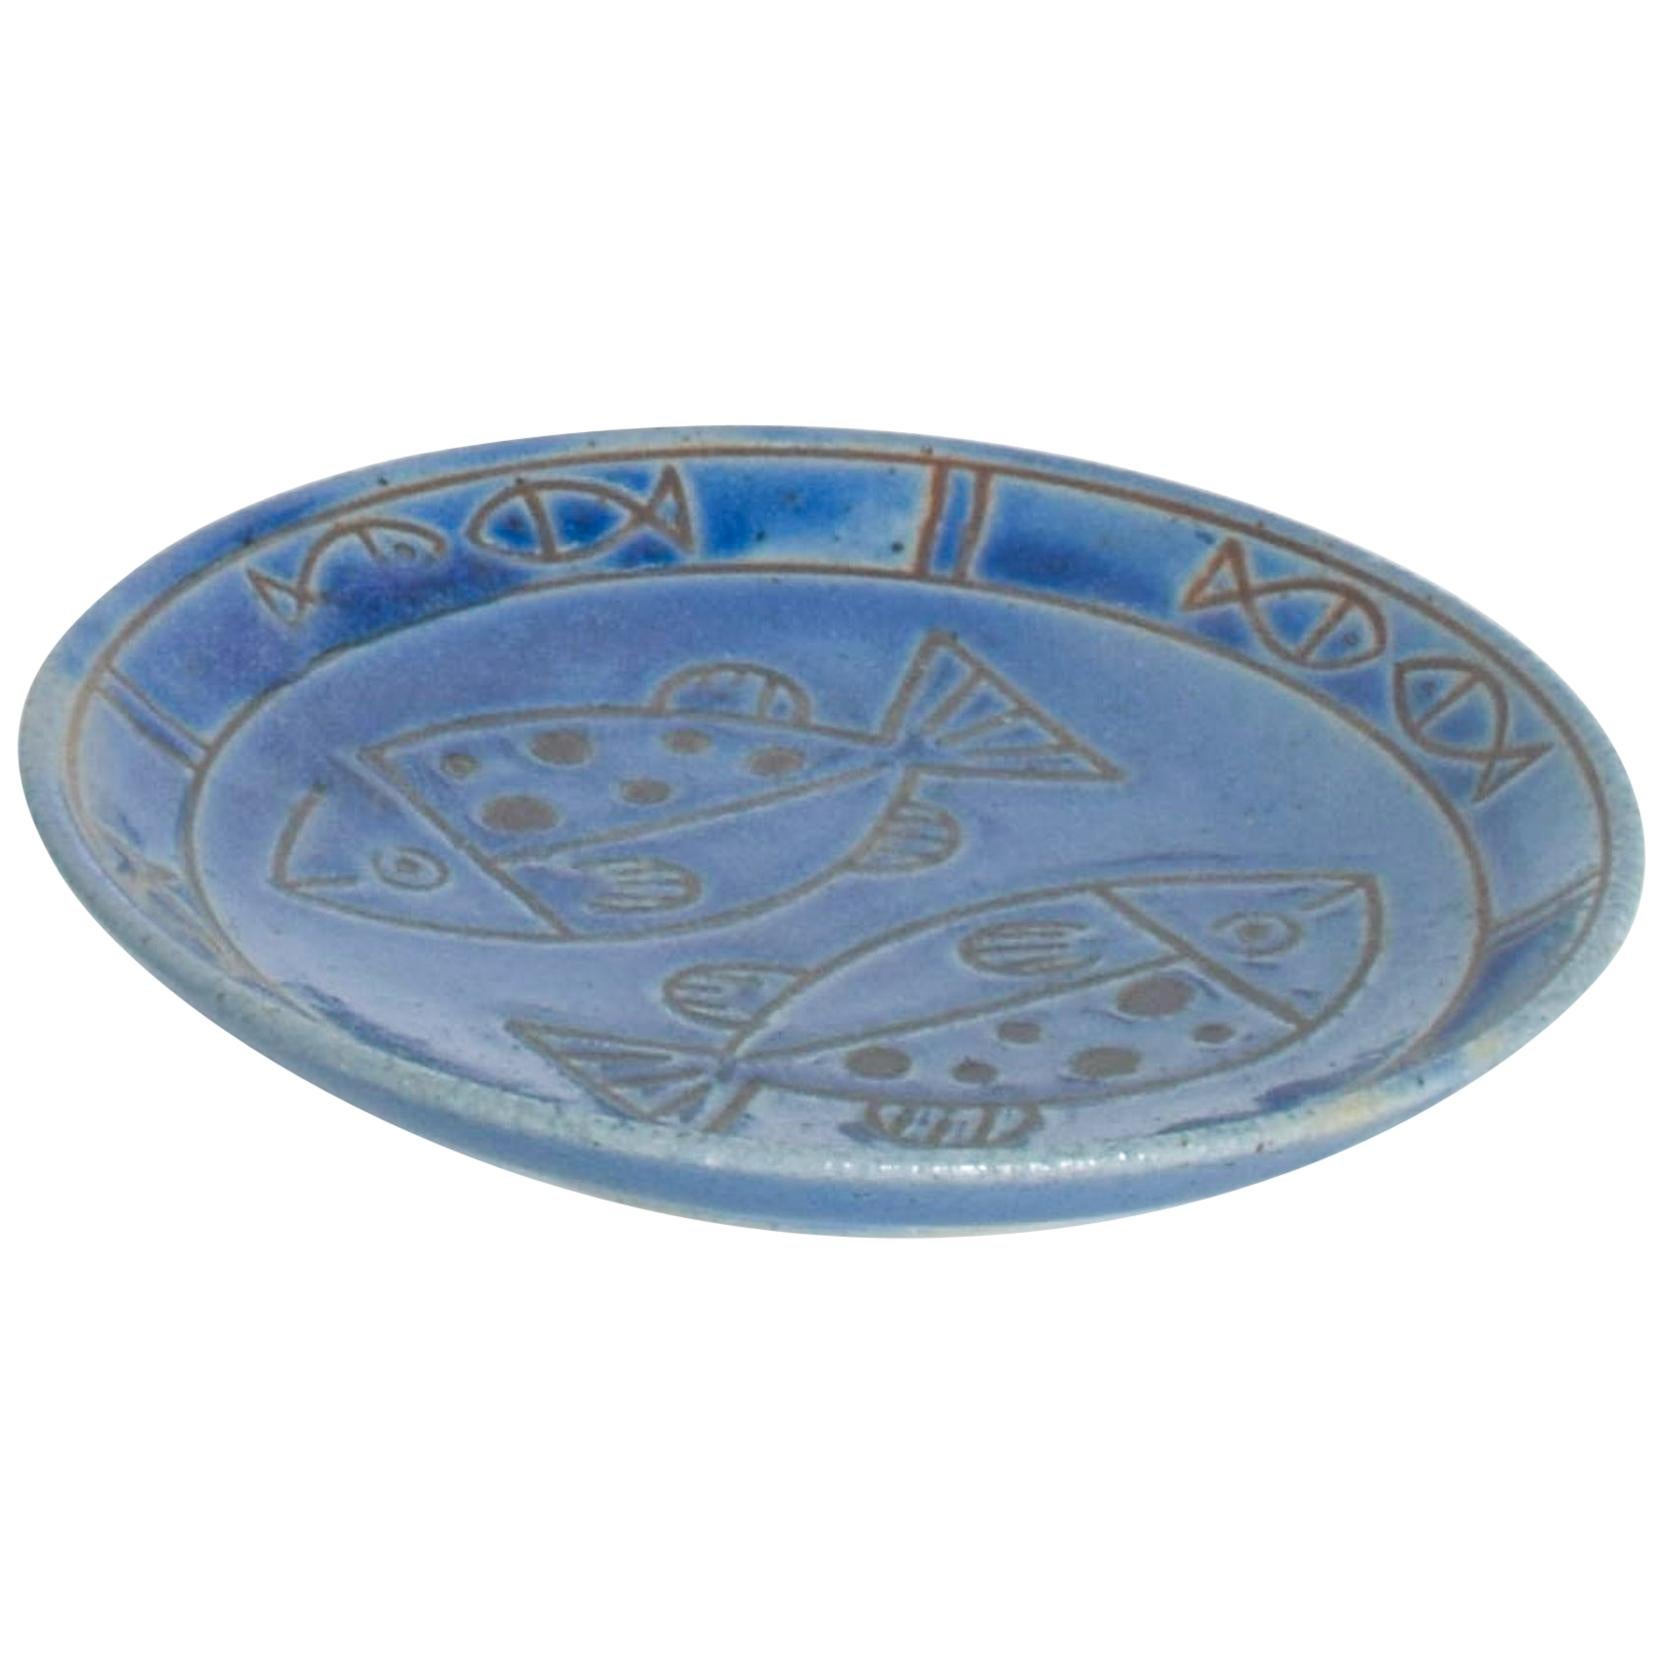 1980s Ceramic Blue Christian Fish Plate Pisces Decorative Display 